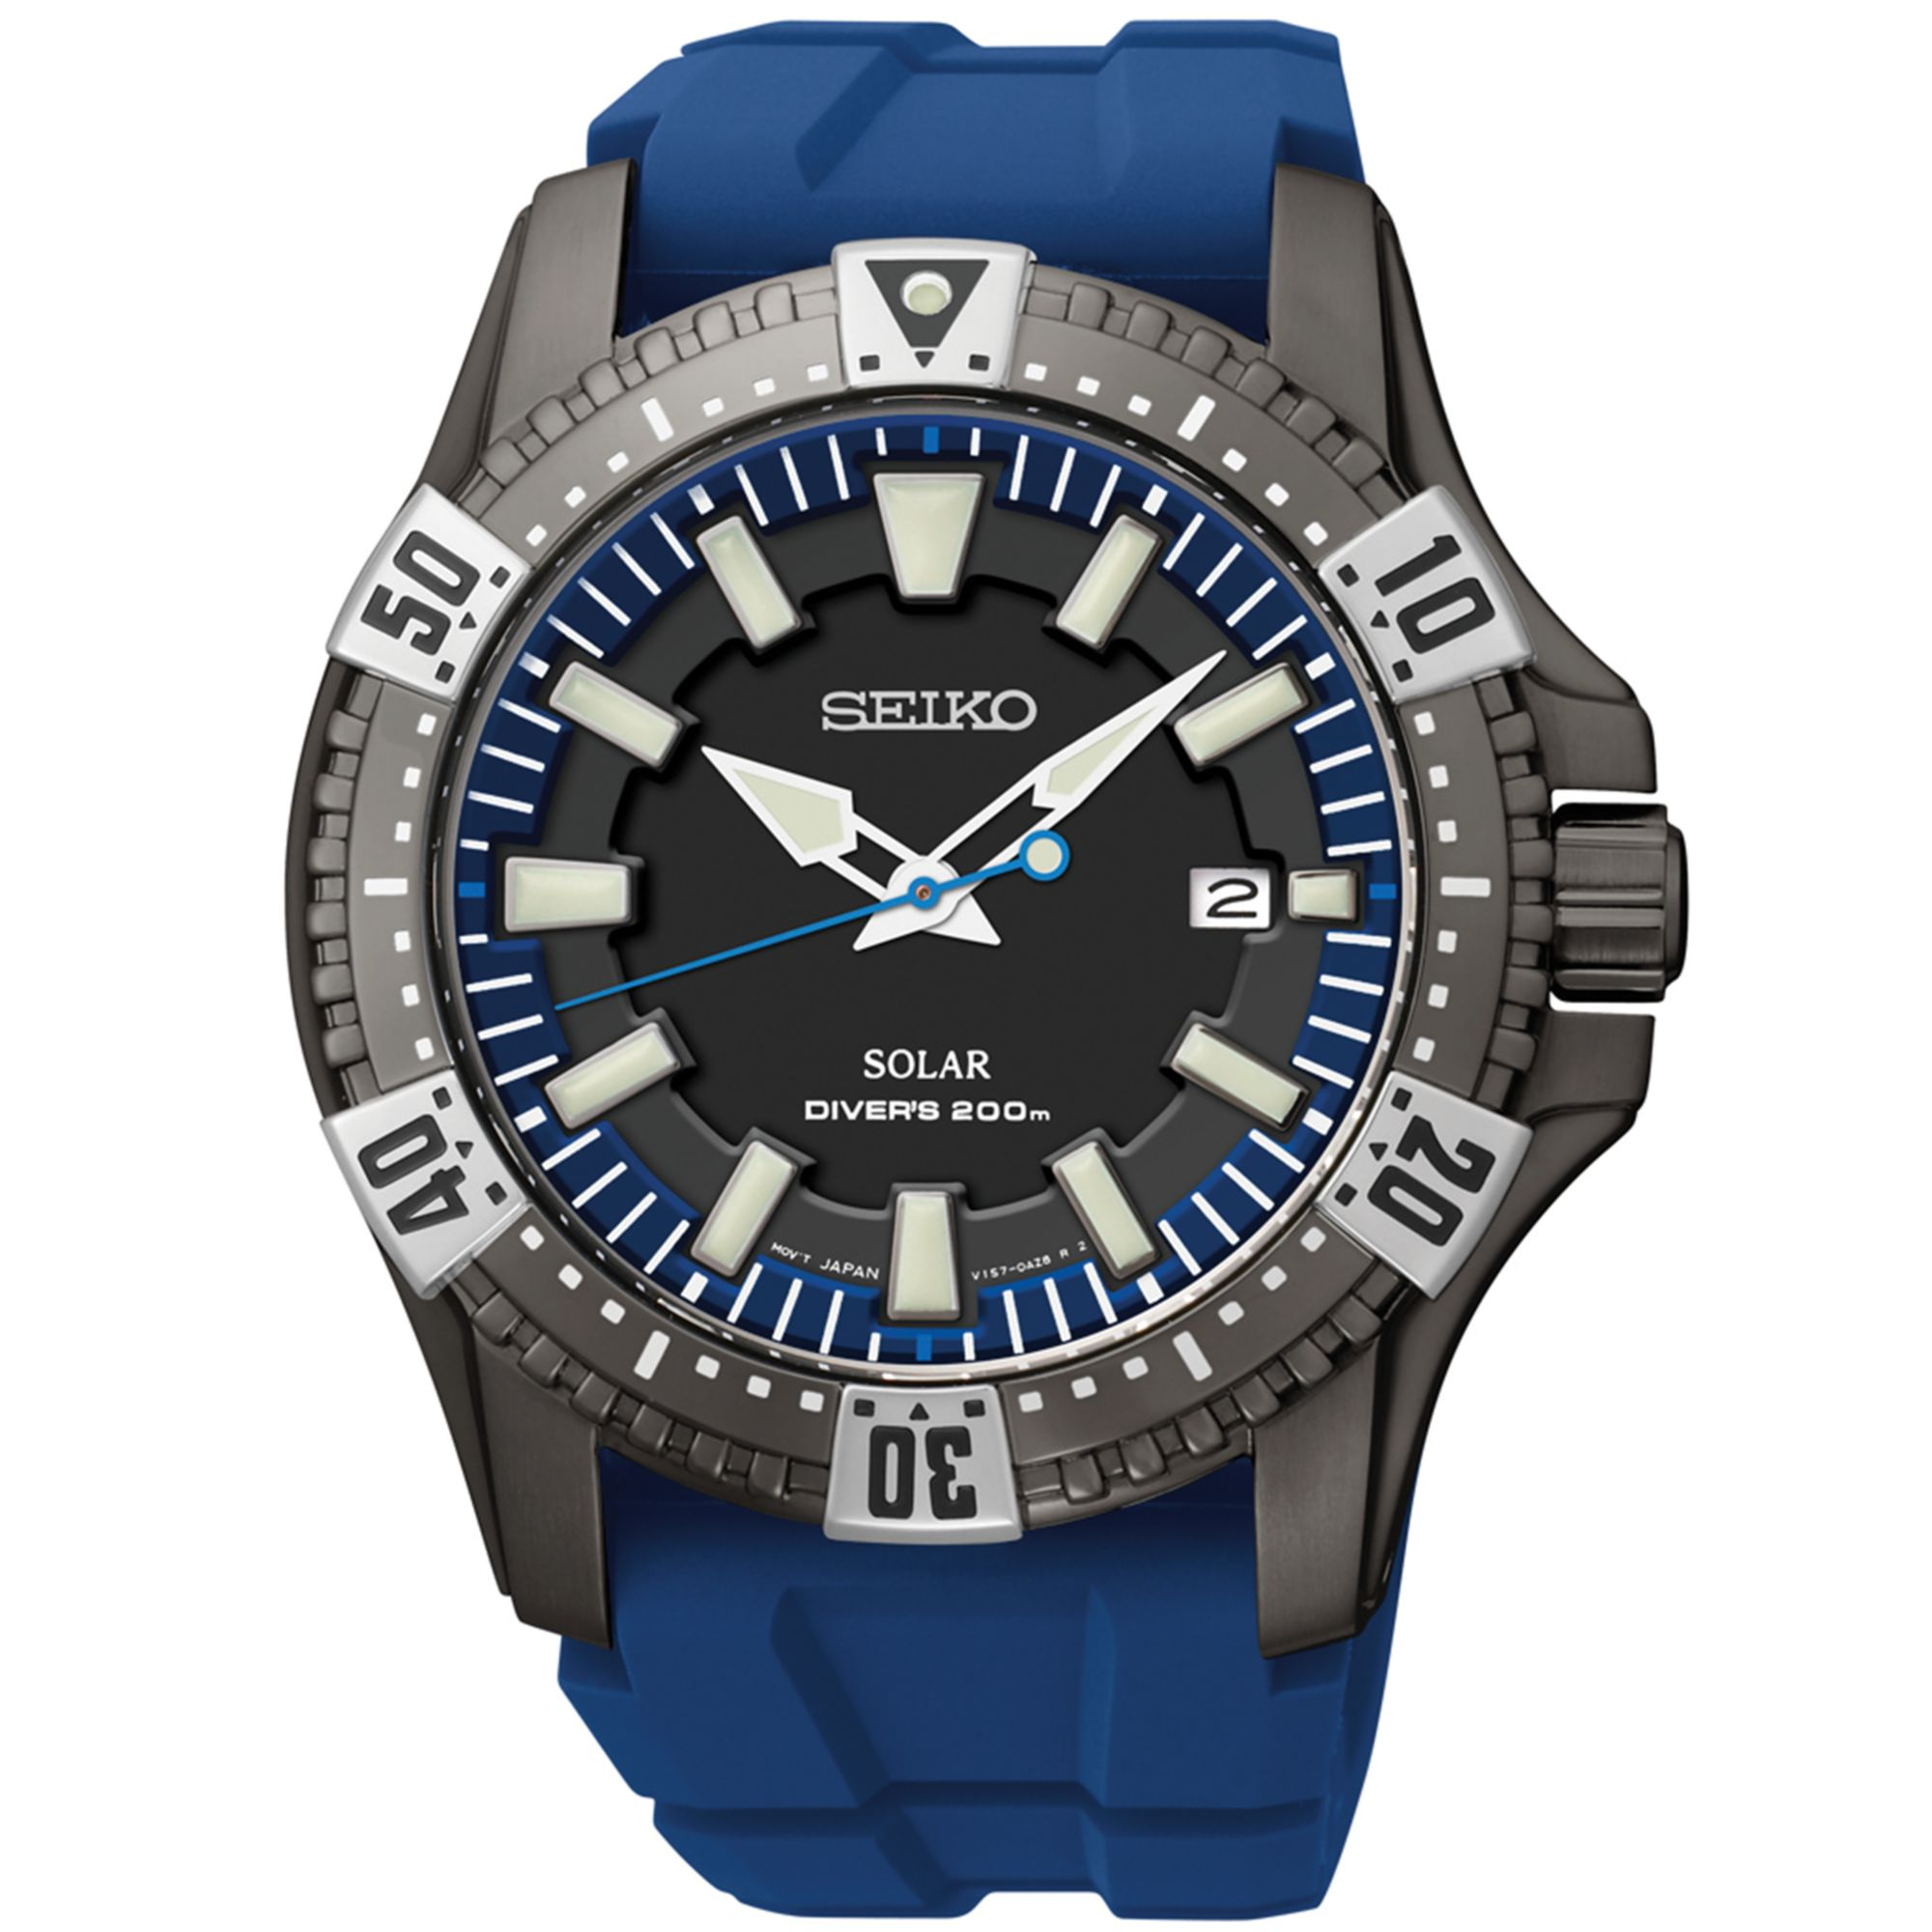 Lyst - Seiko Men's Solar Dive Blue Rubber Strap Watch 45mm Sne283 in